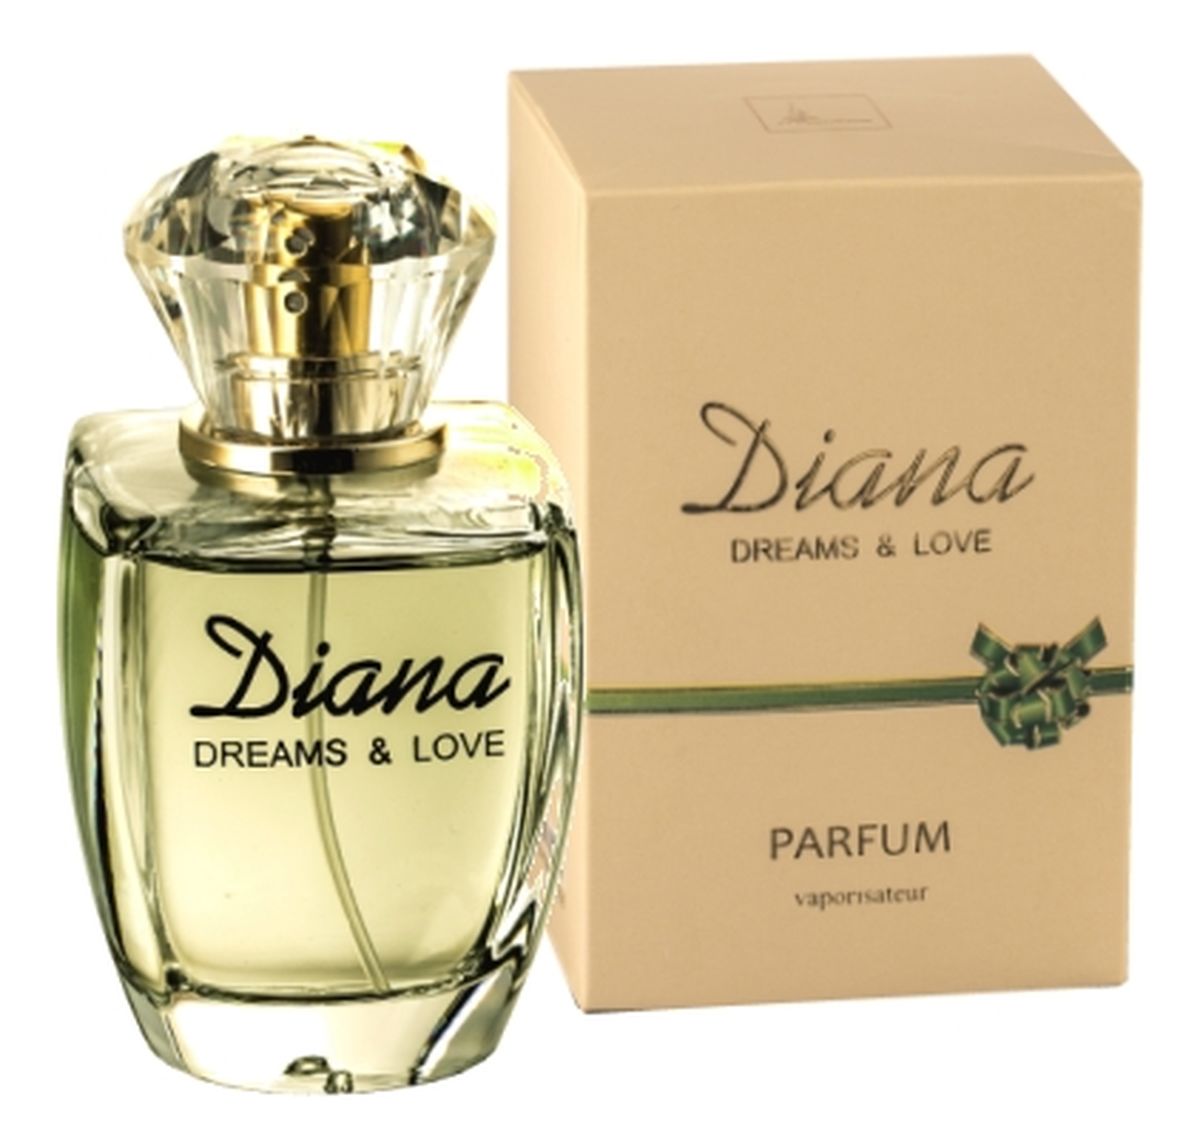 Diana Dreams & Love PARFUM Woda Perfumowana